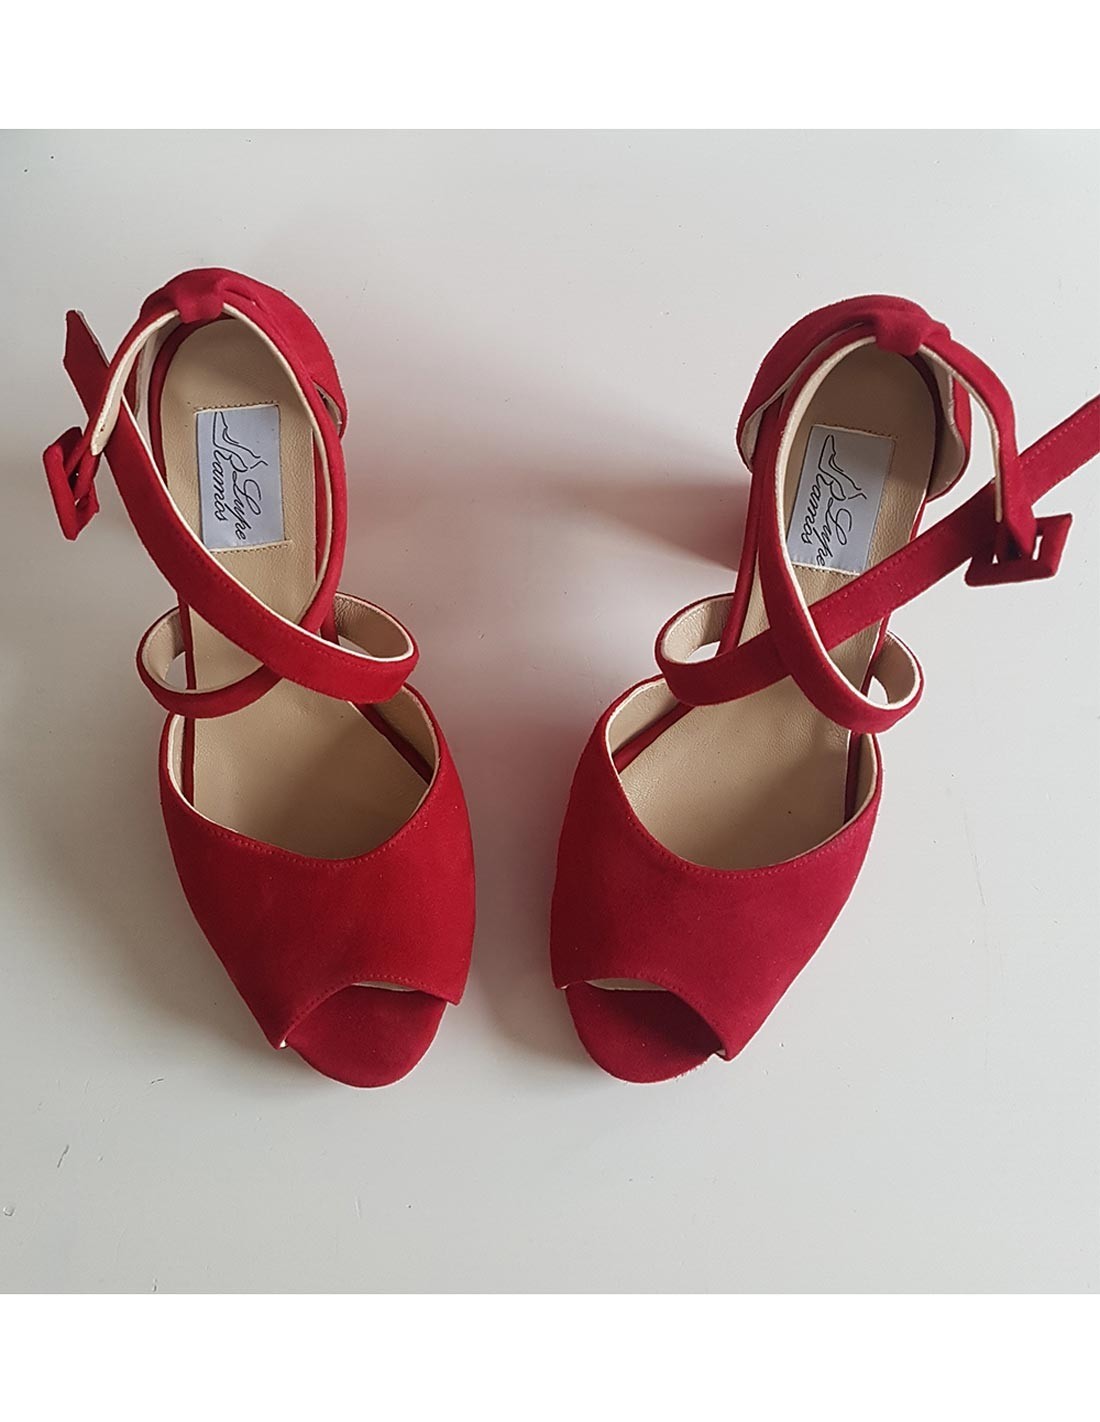 Zapatos bodas de rojo | INVITADISIMA